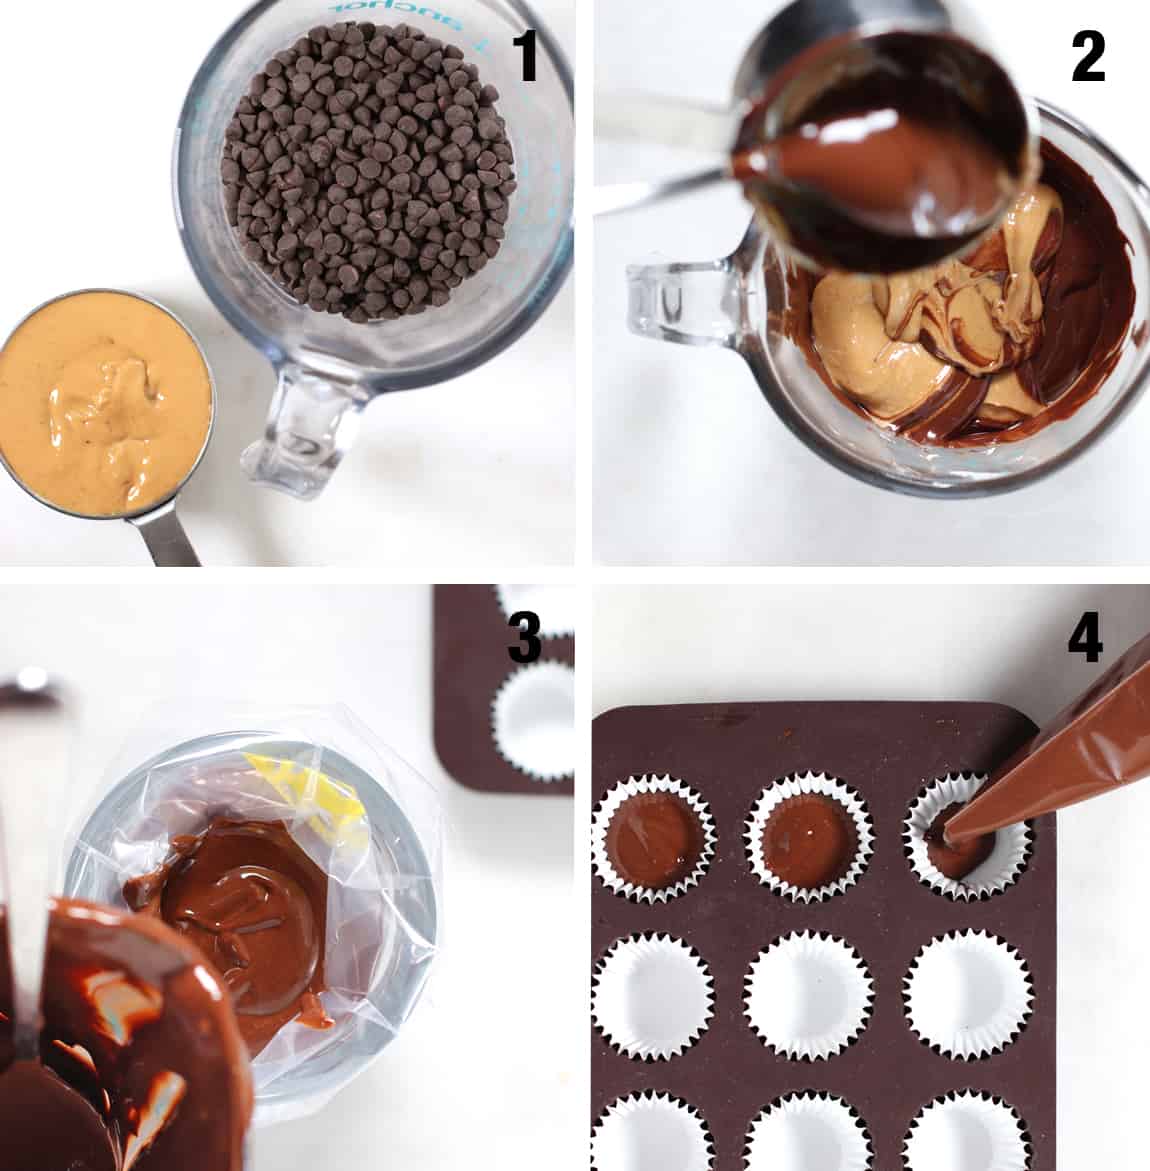 Steps to make chocolate fudge recipe